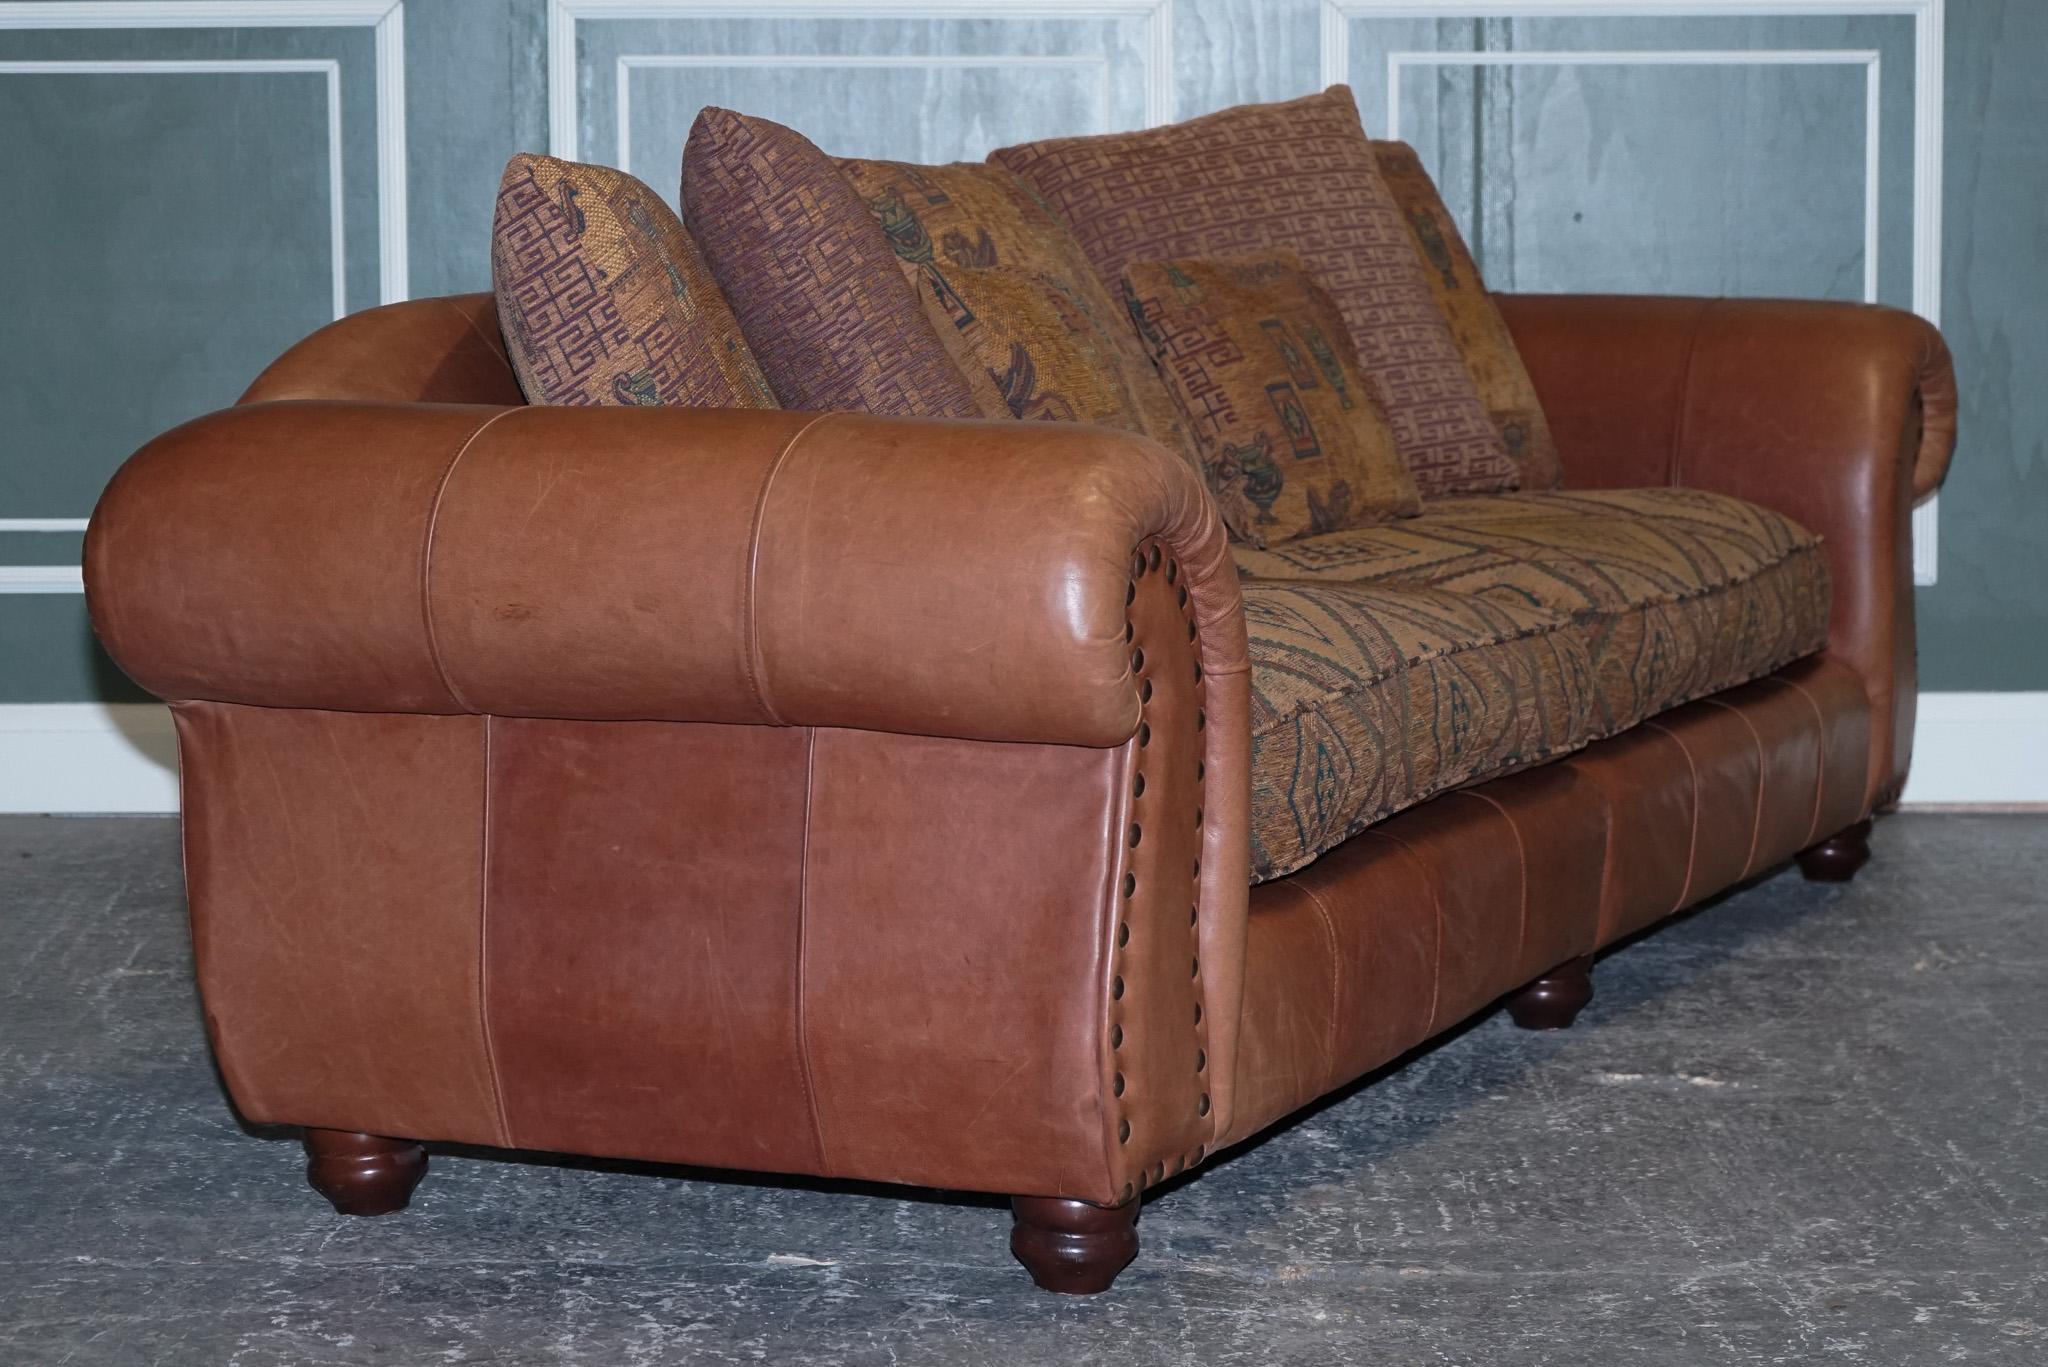 Stunning Thomas Lloyd Leather with Egyptian Pattern Fabric Grand Sofa 4